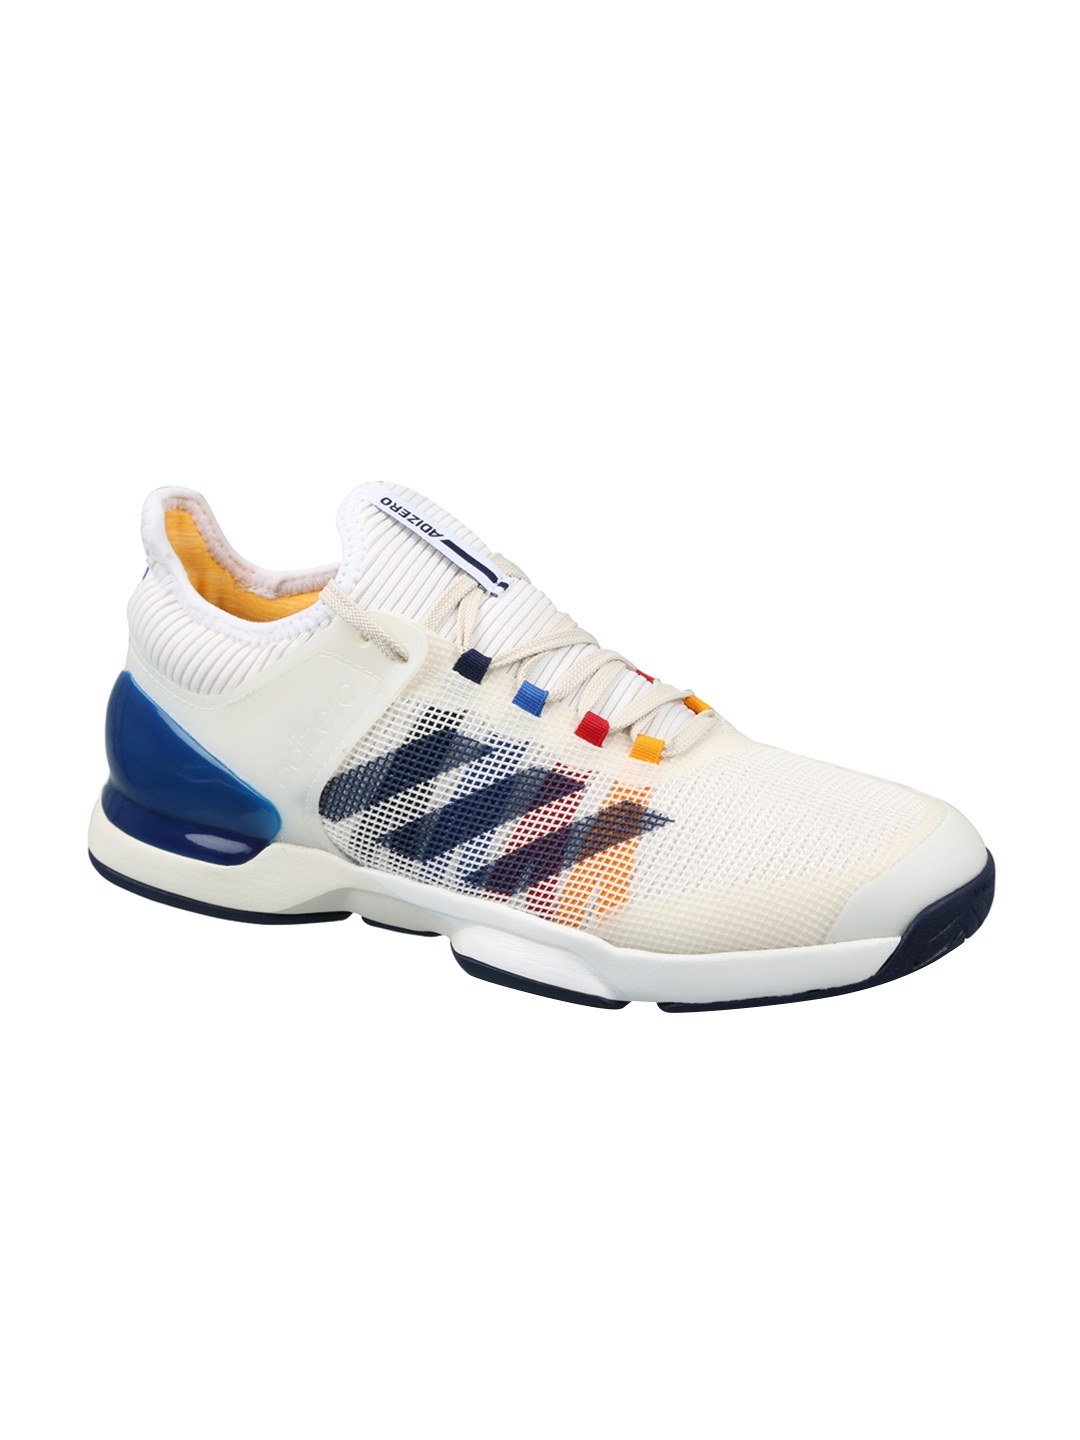 Buy ADIDAS Men Off White ADIZERO Ubersonic 2 PW Tennis - Sports Shoes Men 1989756 | Myntra